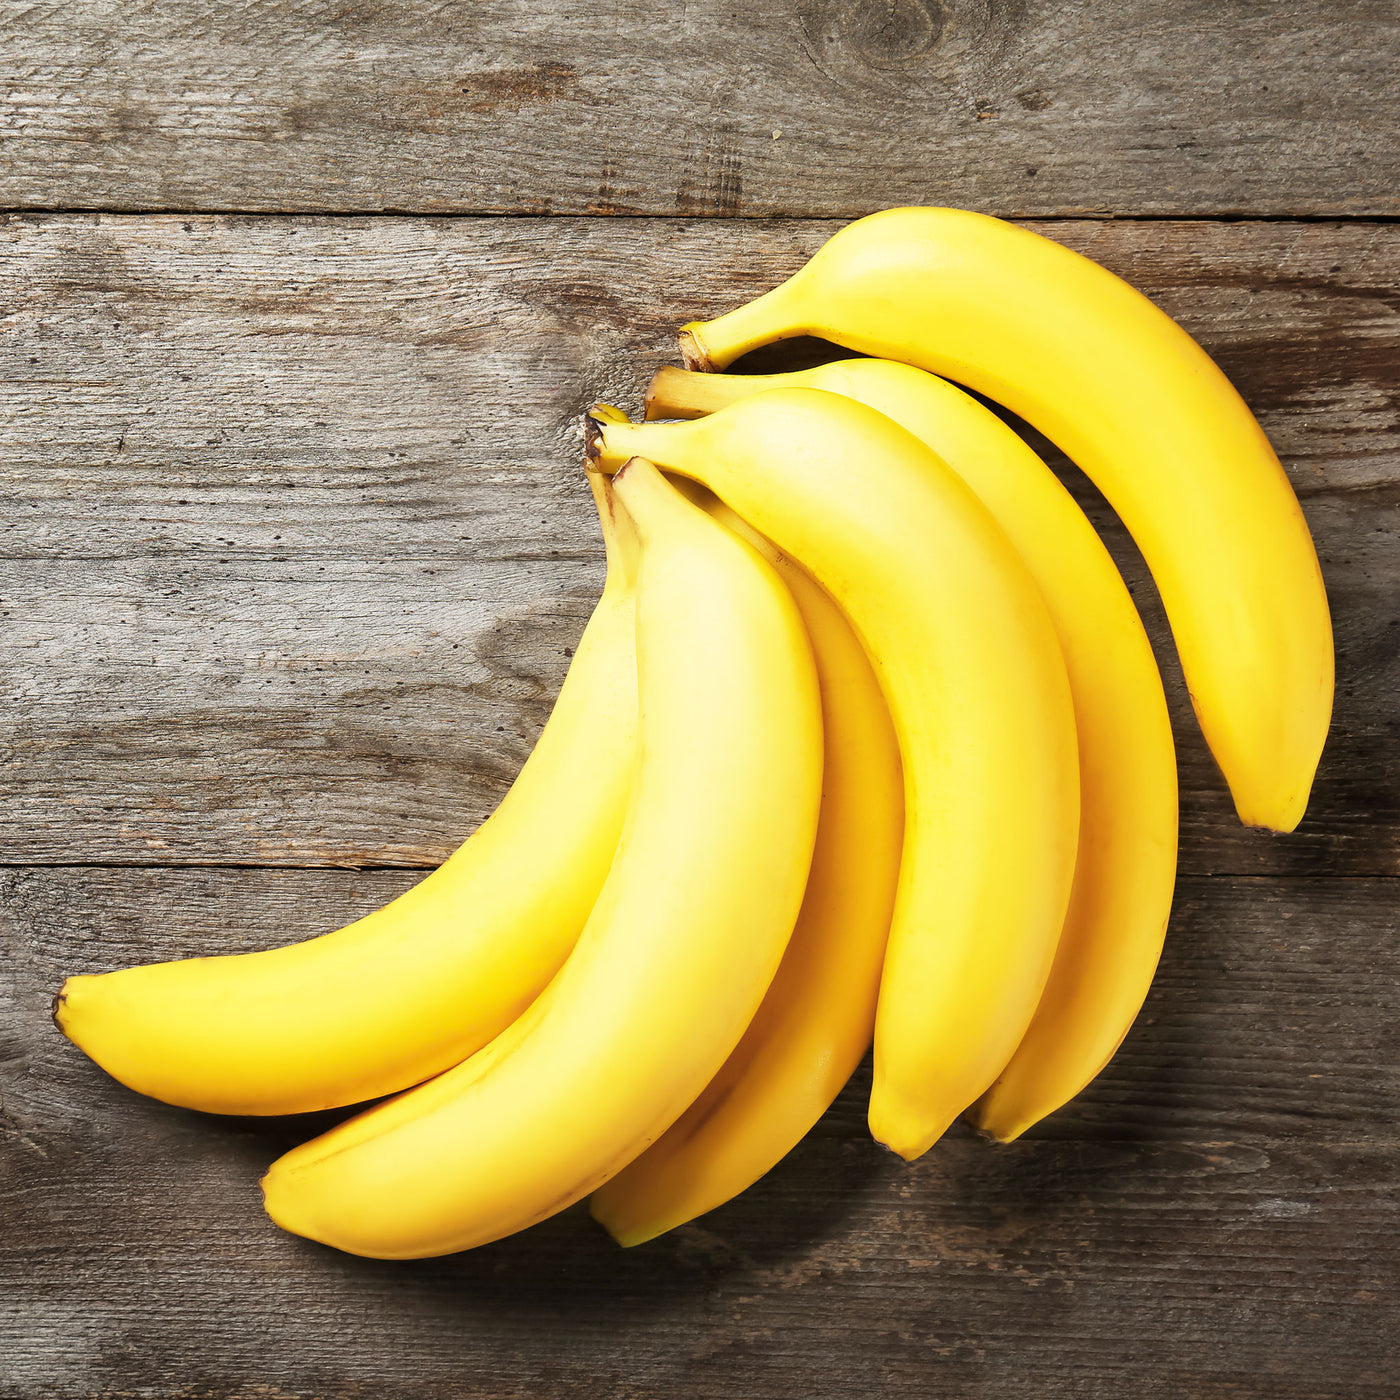 Seasonal Organic Bananas 1kg